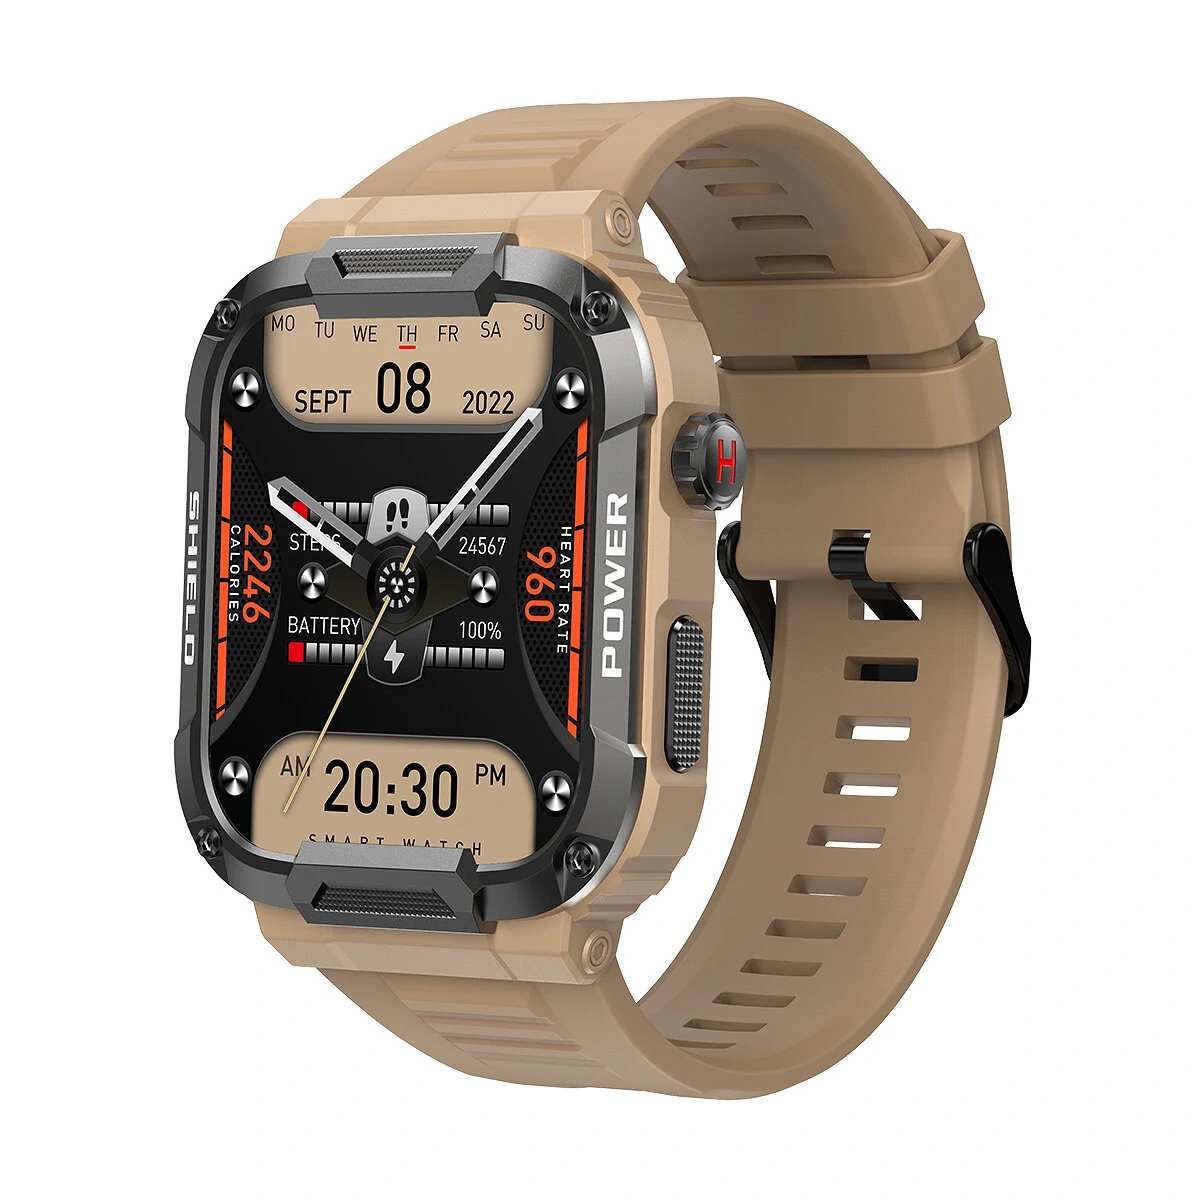 MK66 1.85 inch HD Screen Smart Watch Banggood Coupon Promo Code